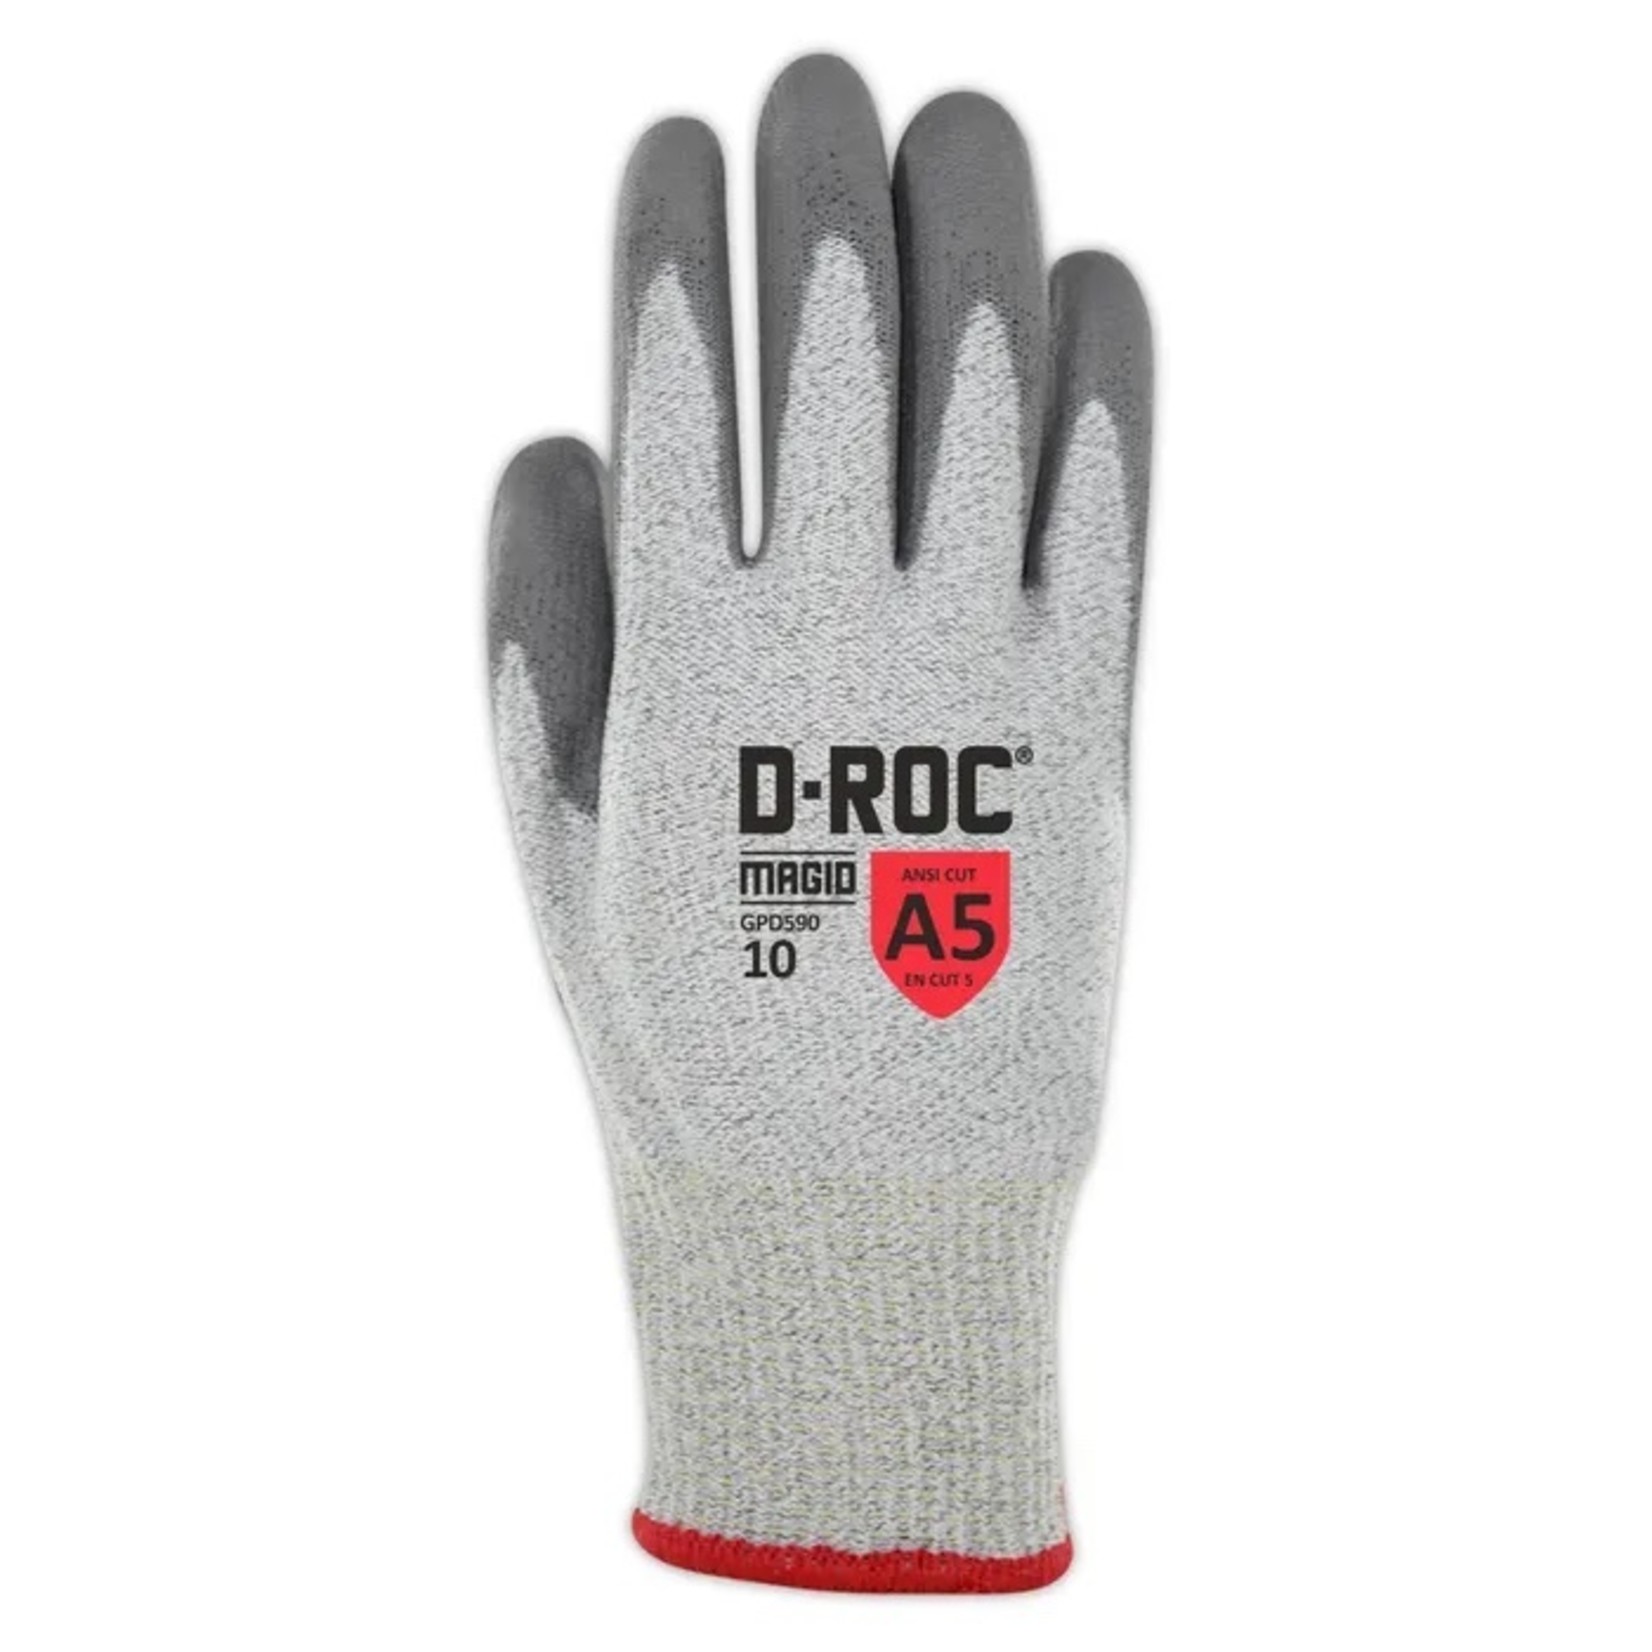 Magid Glove & Safety D-ROC GPD590 Polyurethane Palm Coated Work Glove – Cut Level A5 (12 Pairs Per Pack)